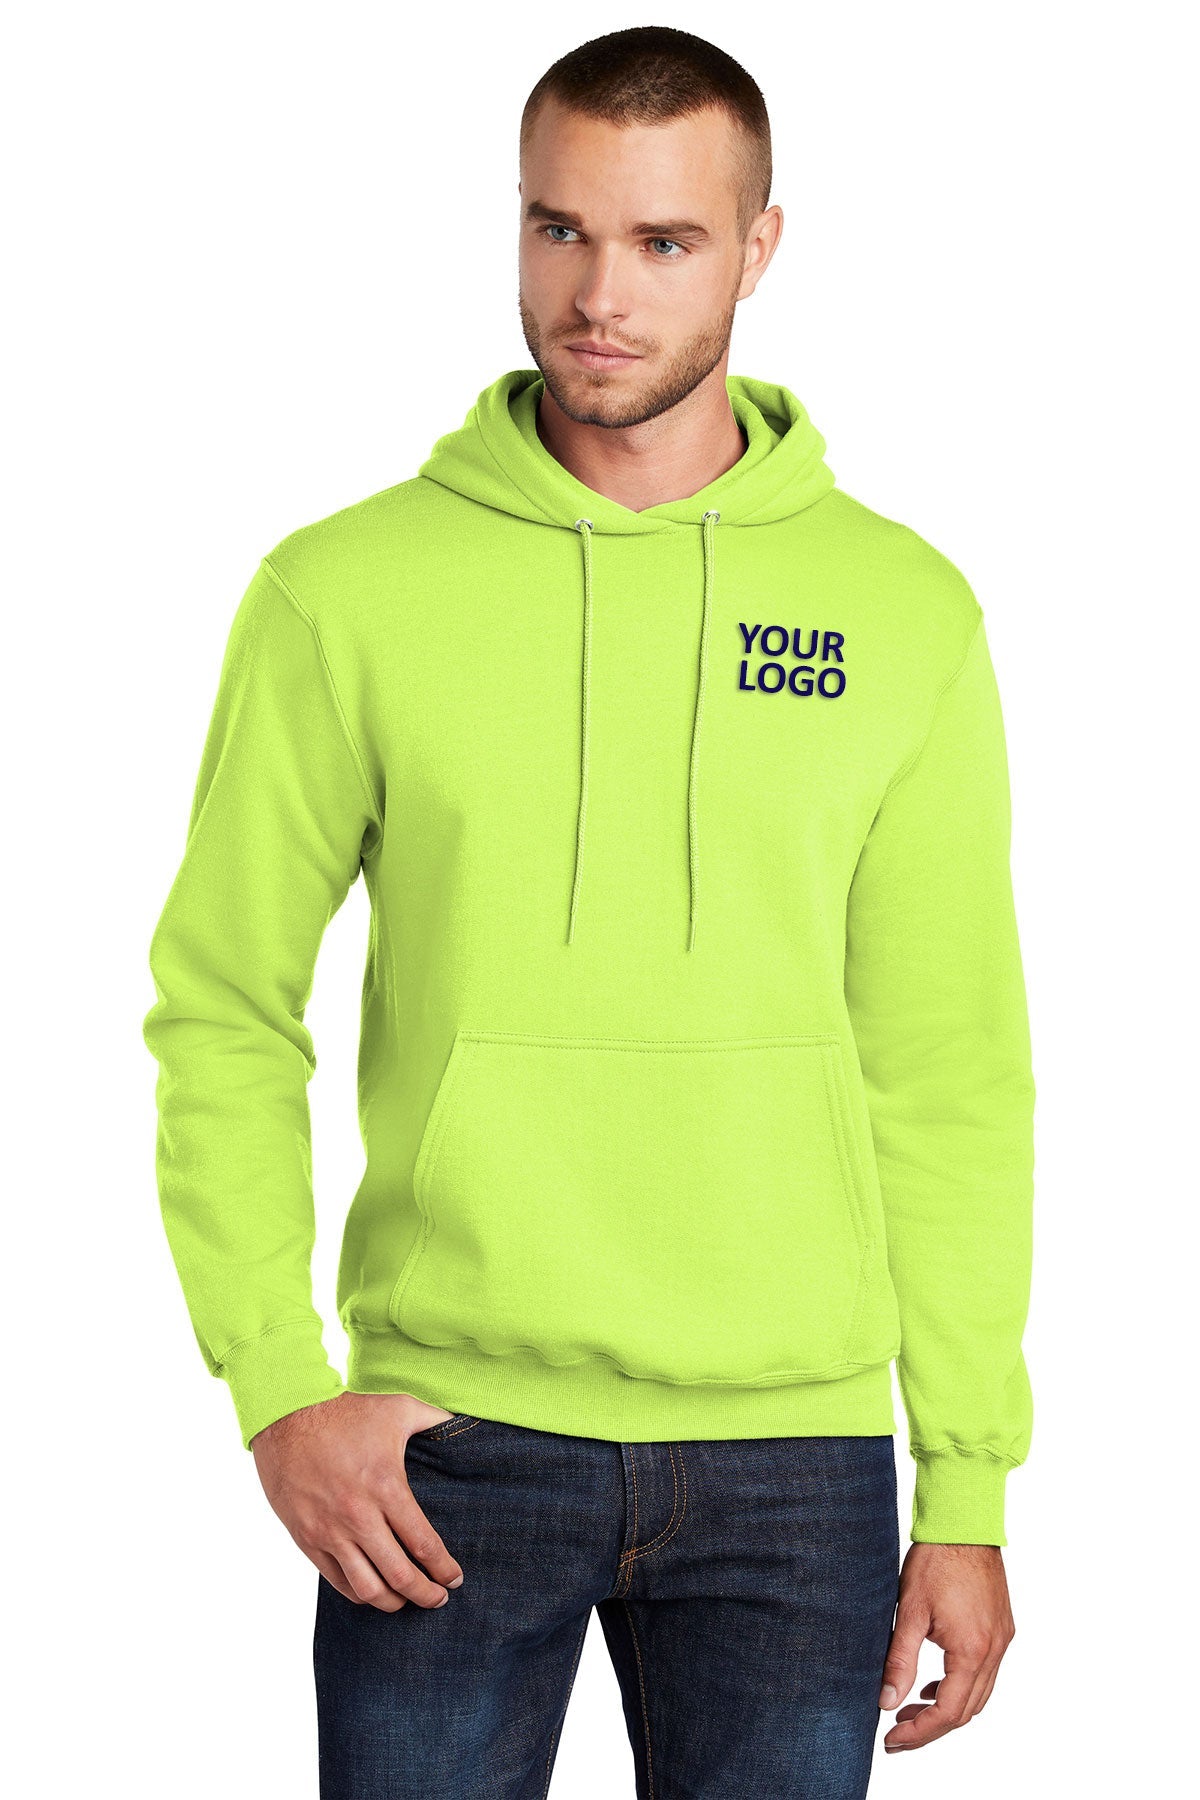 port & company neon yellow pc78h sweatshirts with company logo